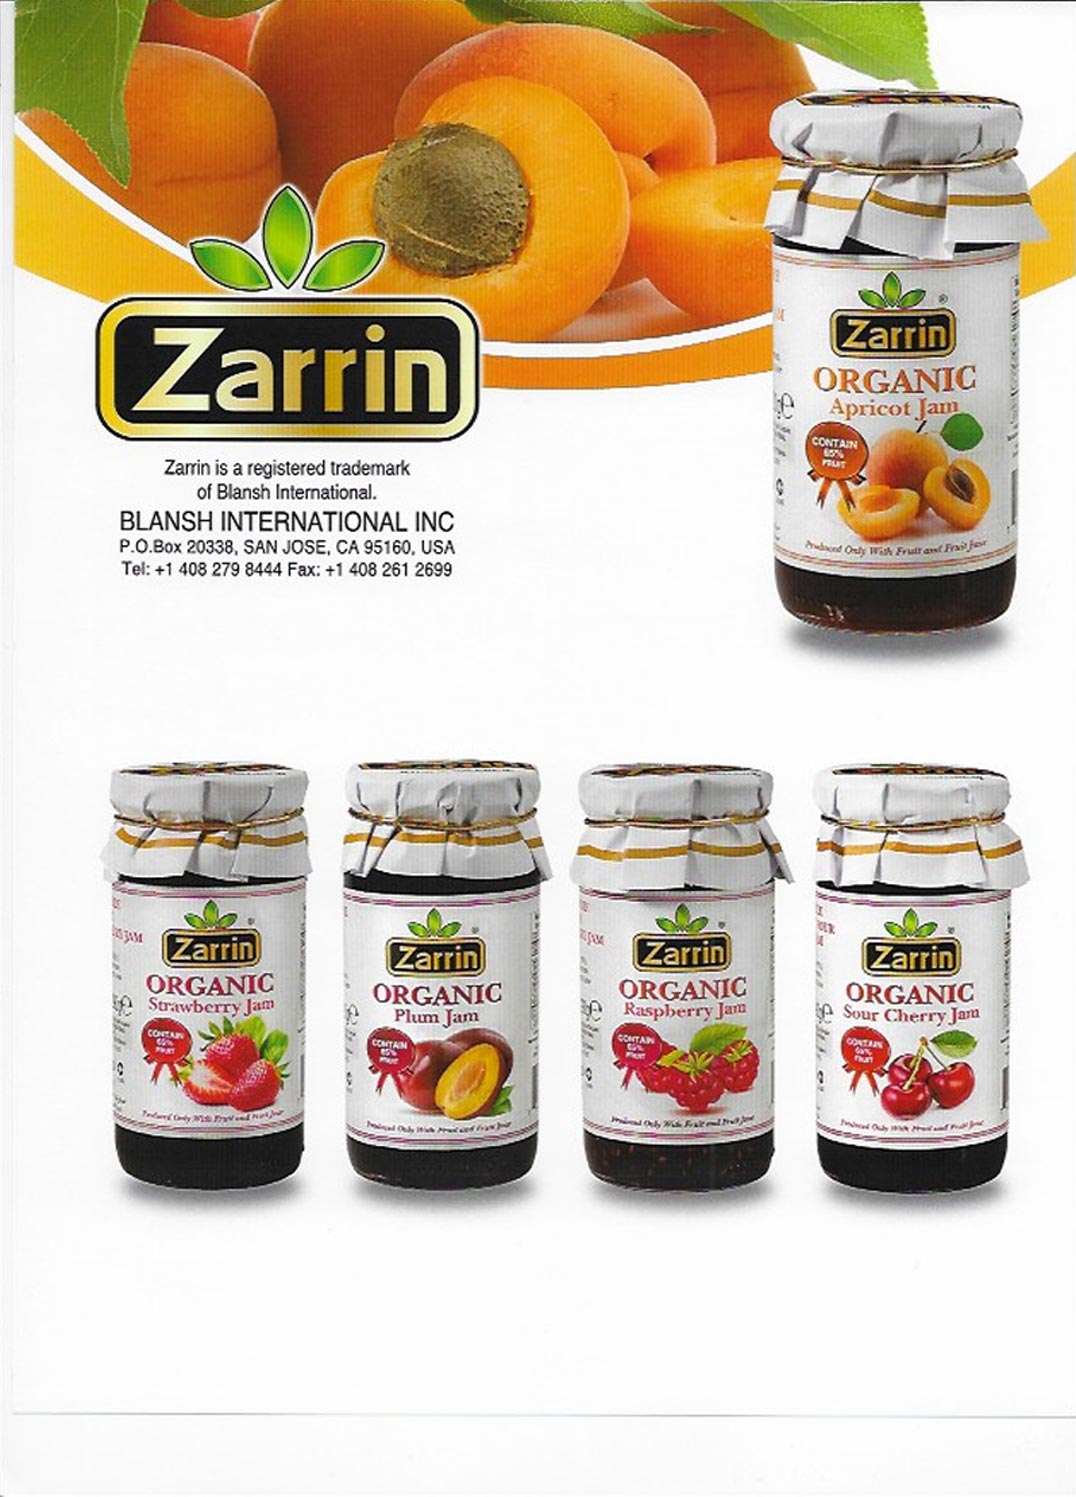 Zarrin is a grocery, including jams, wholesale distributors in San Jose, CA